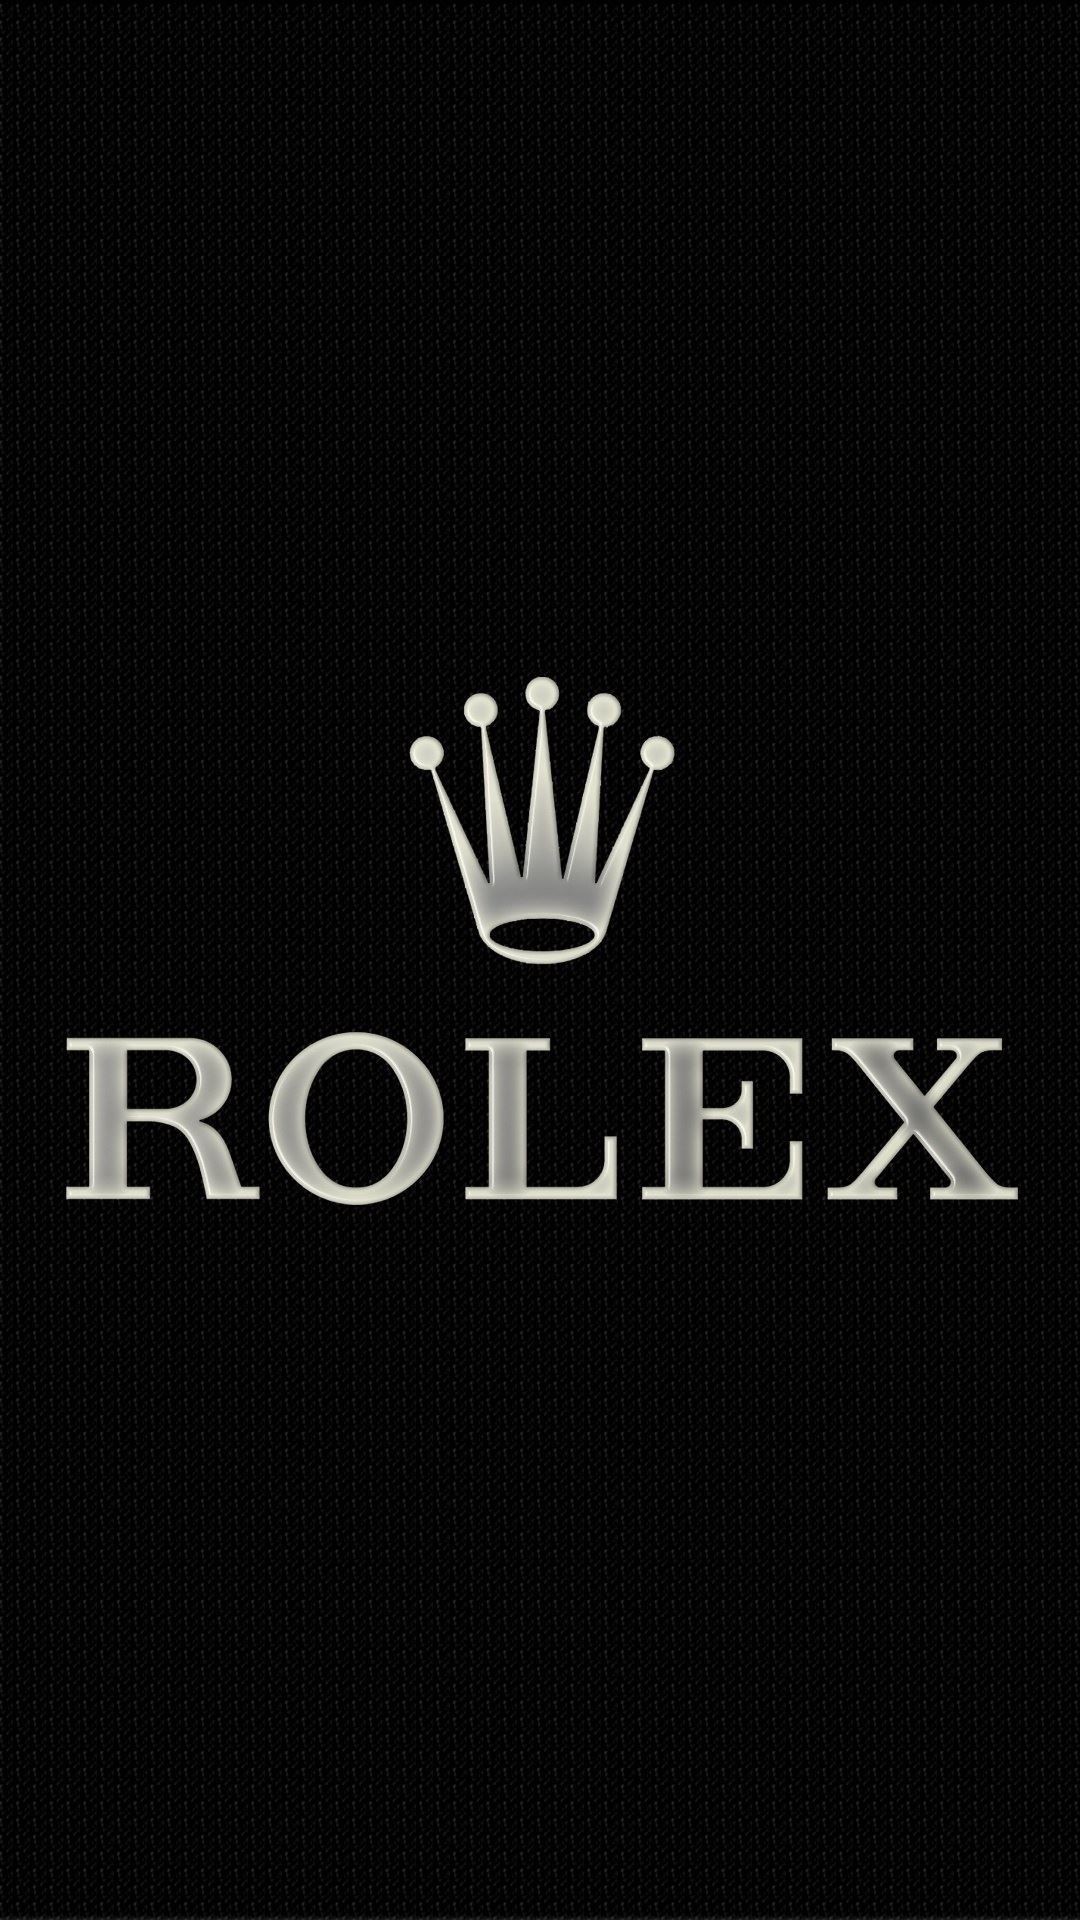 1080x1920 Mobile Legend Cool Name Best Of Rolex Logo iPhone 6 Plus Hd Wallpaper iPod  Wallpaper Hd